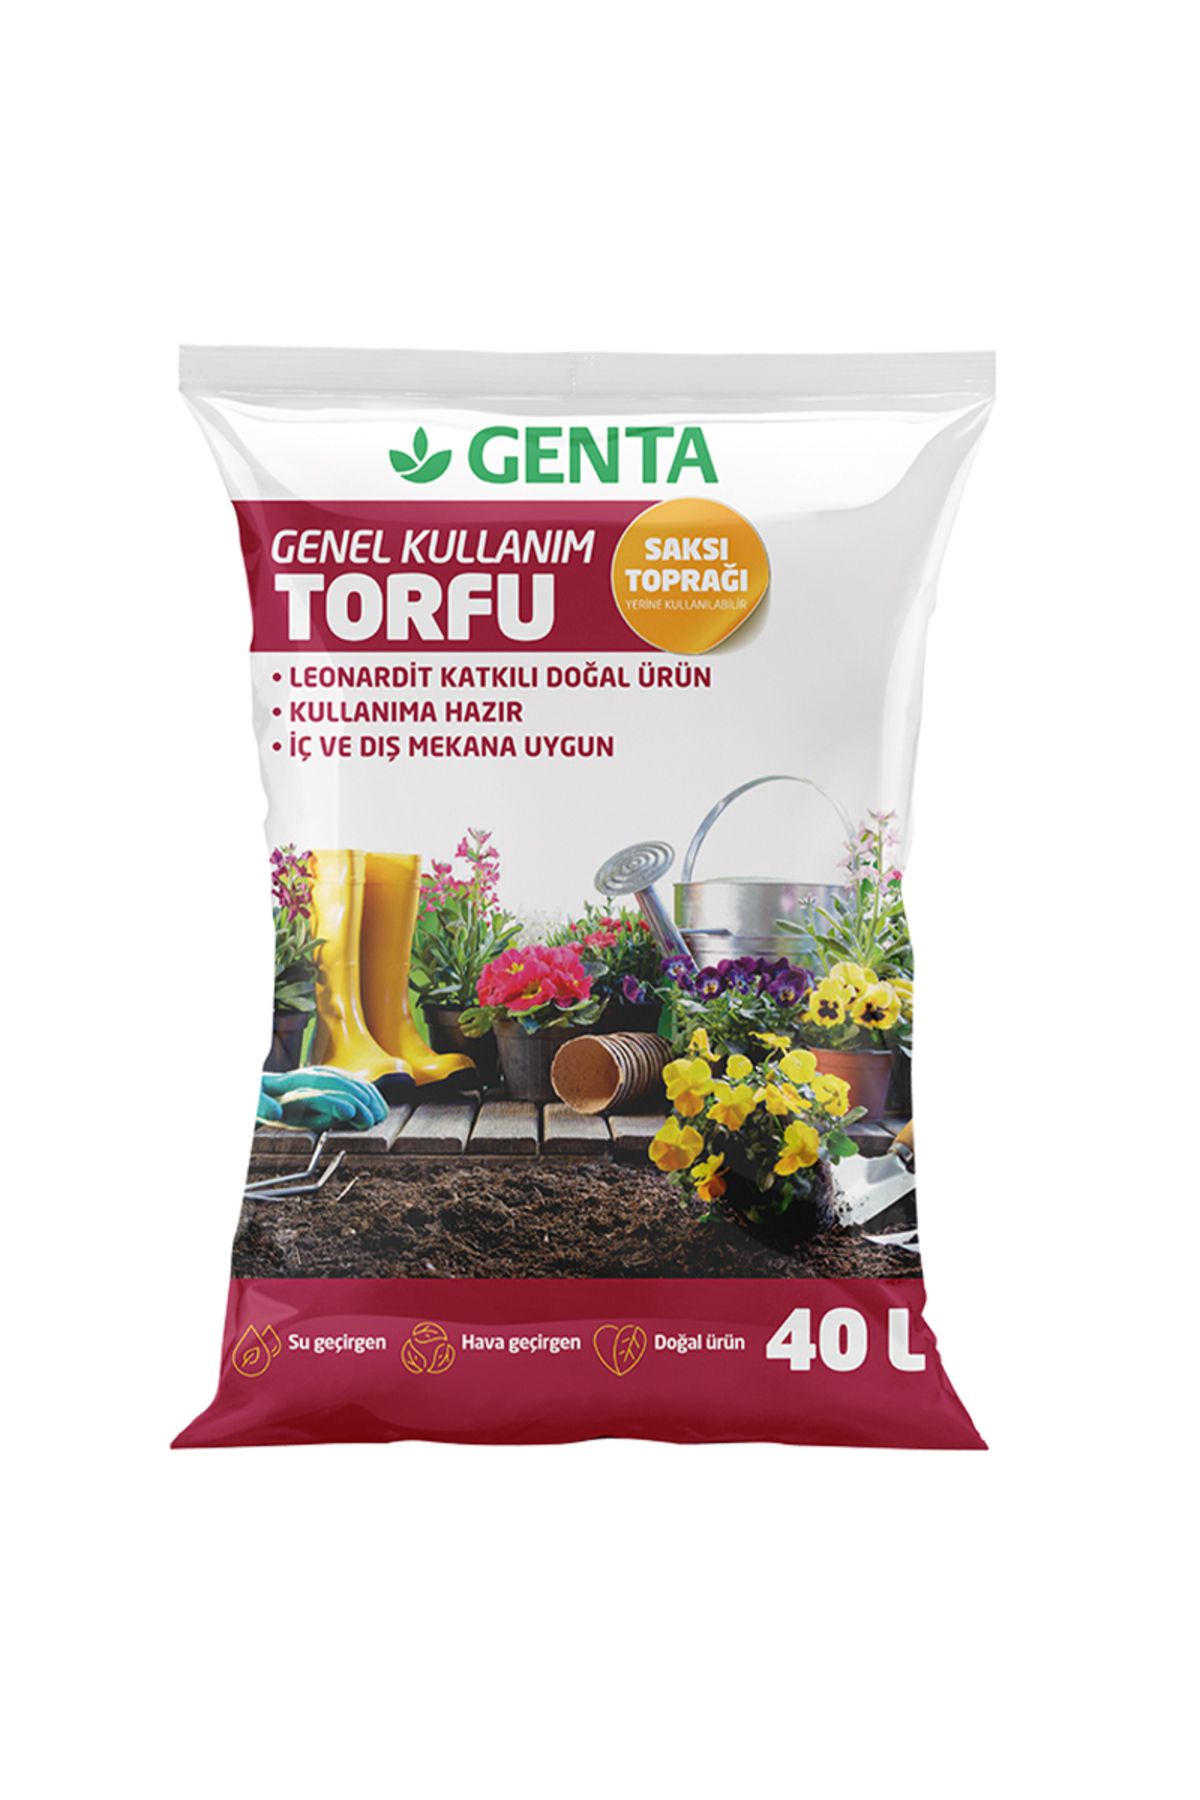 Genta Genel Kullanım Torfu 40 Lt